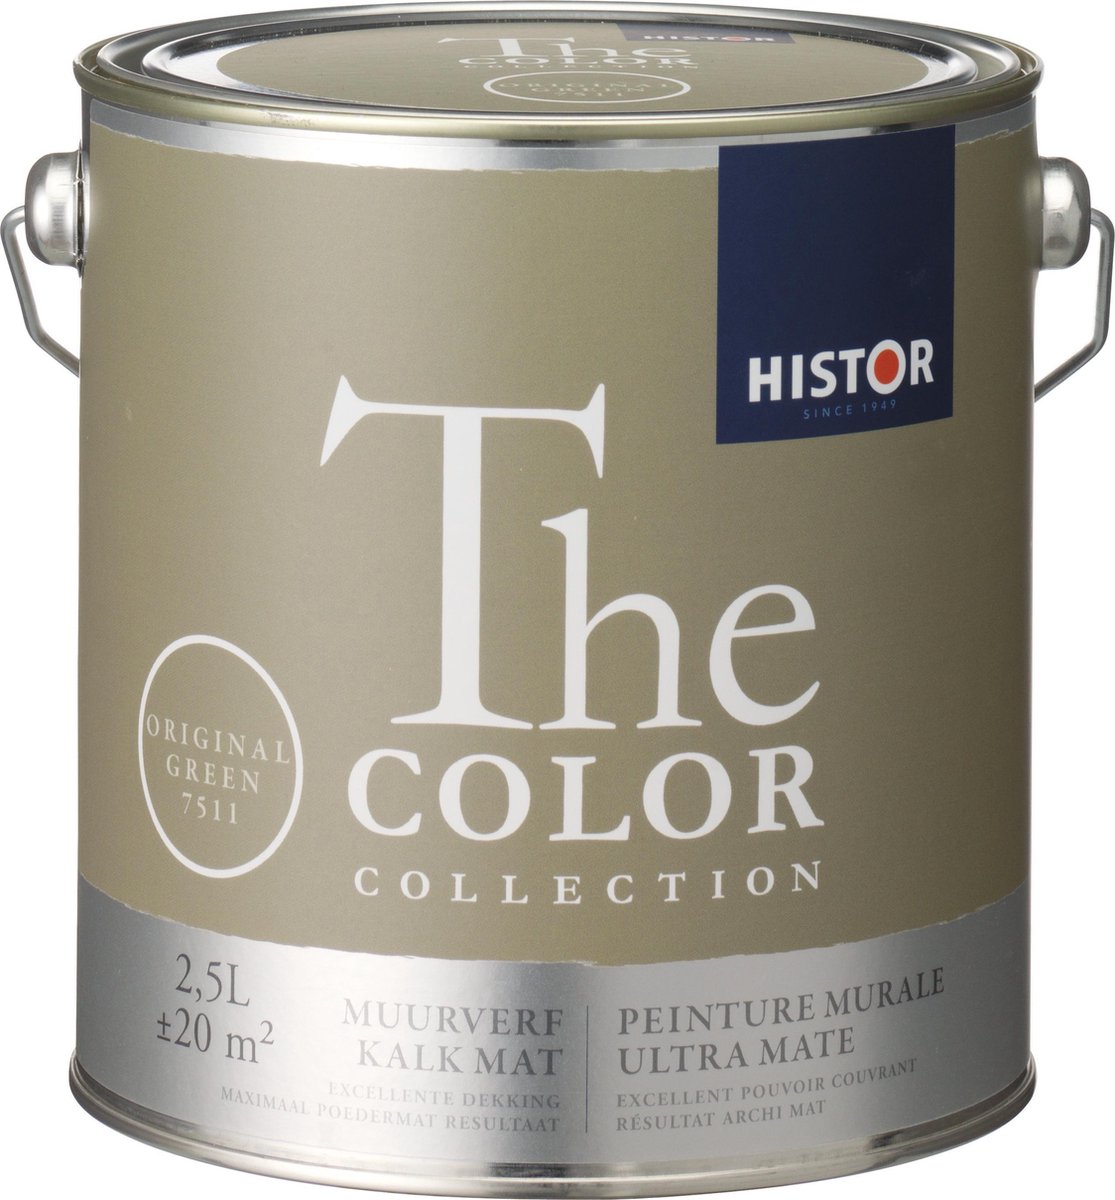 Histor Color Collection Muurverf 2,5 - Original Green | bol.com